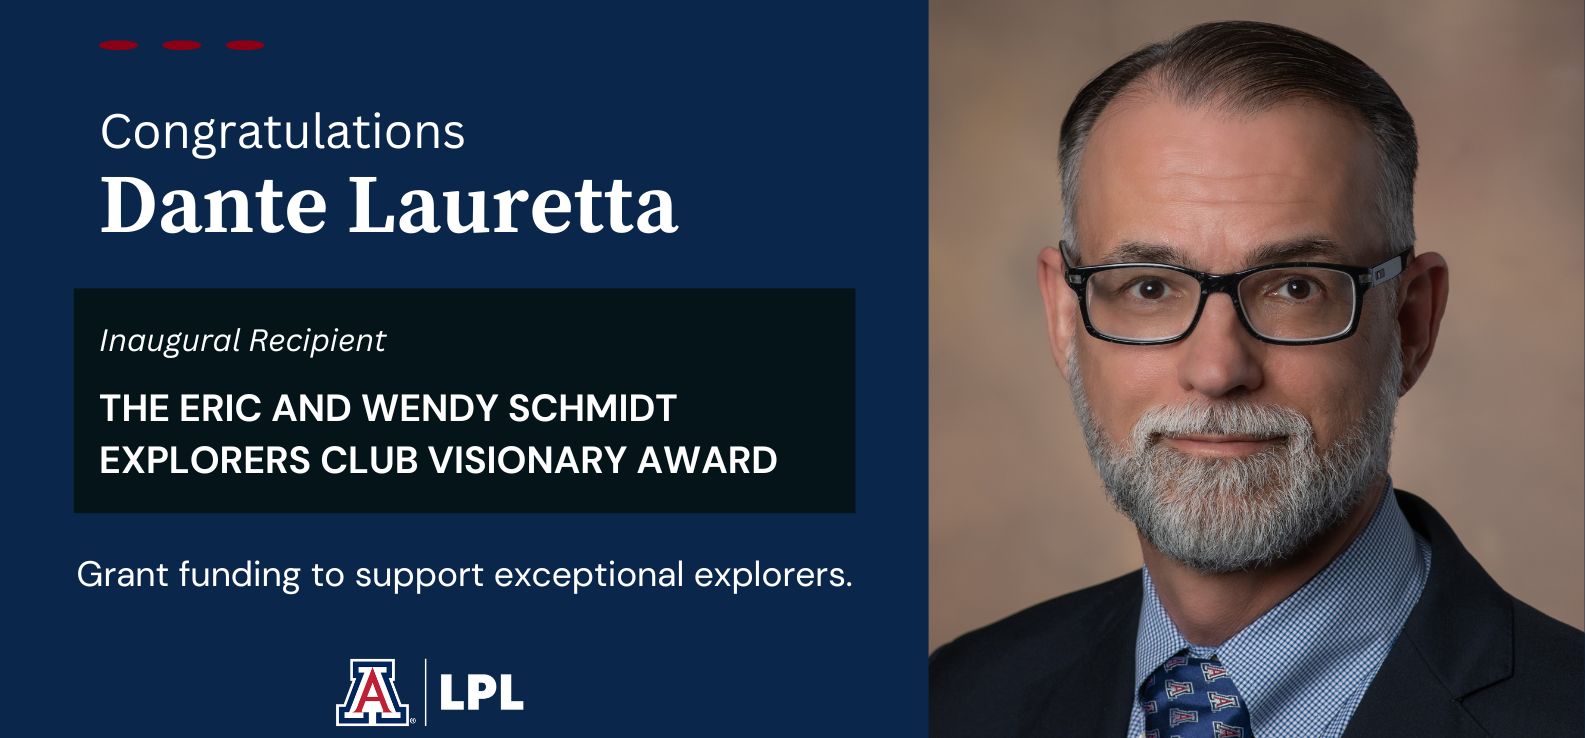 Dante Lauretta - Exploreres Club Visionary Award